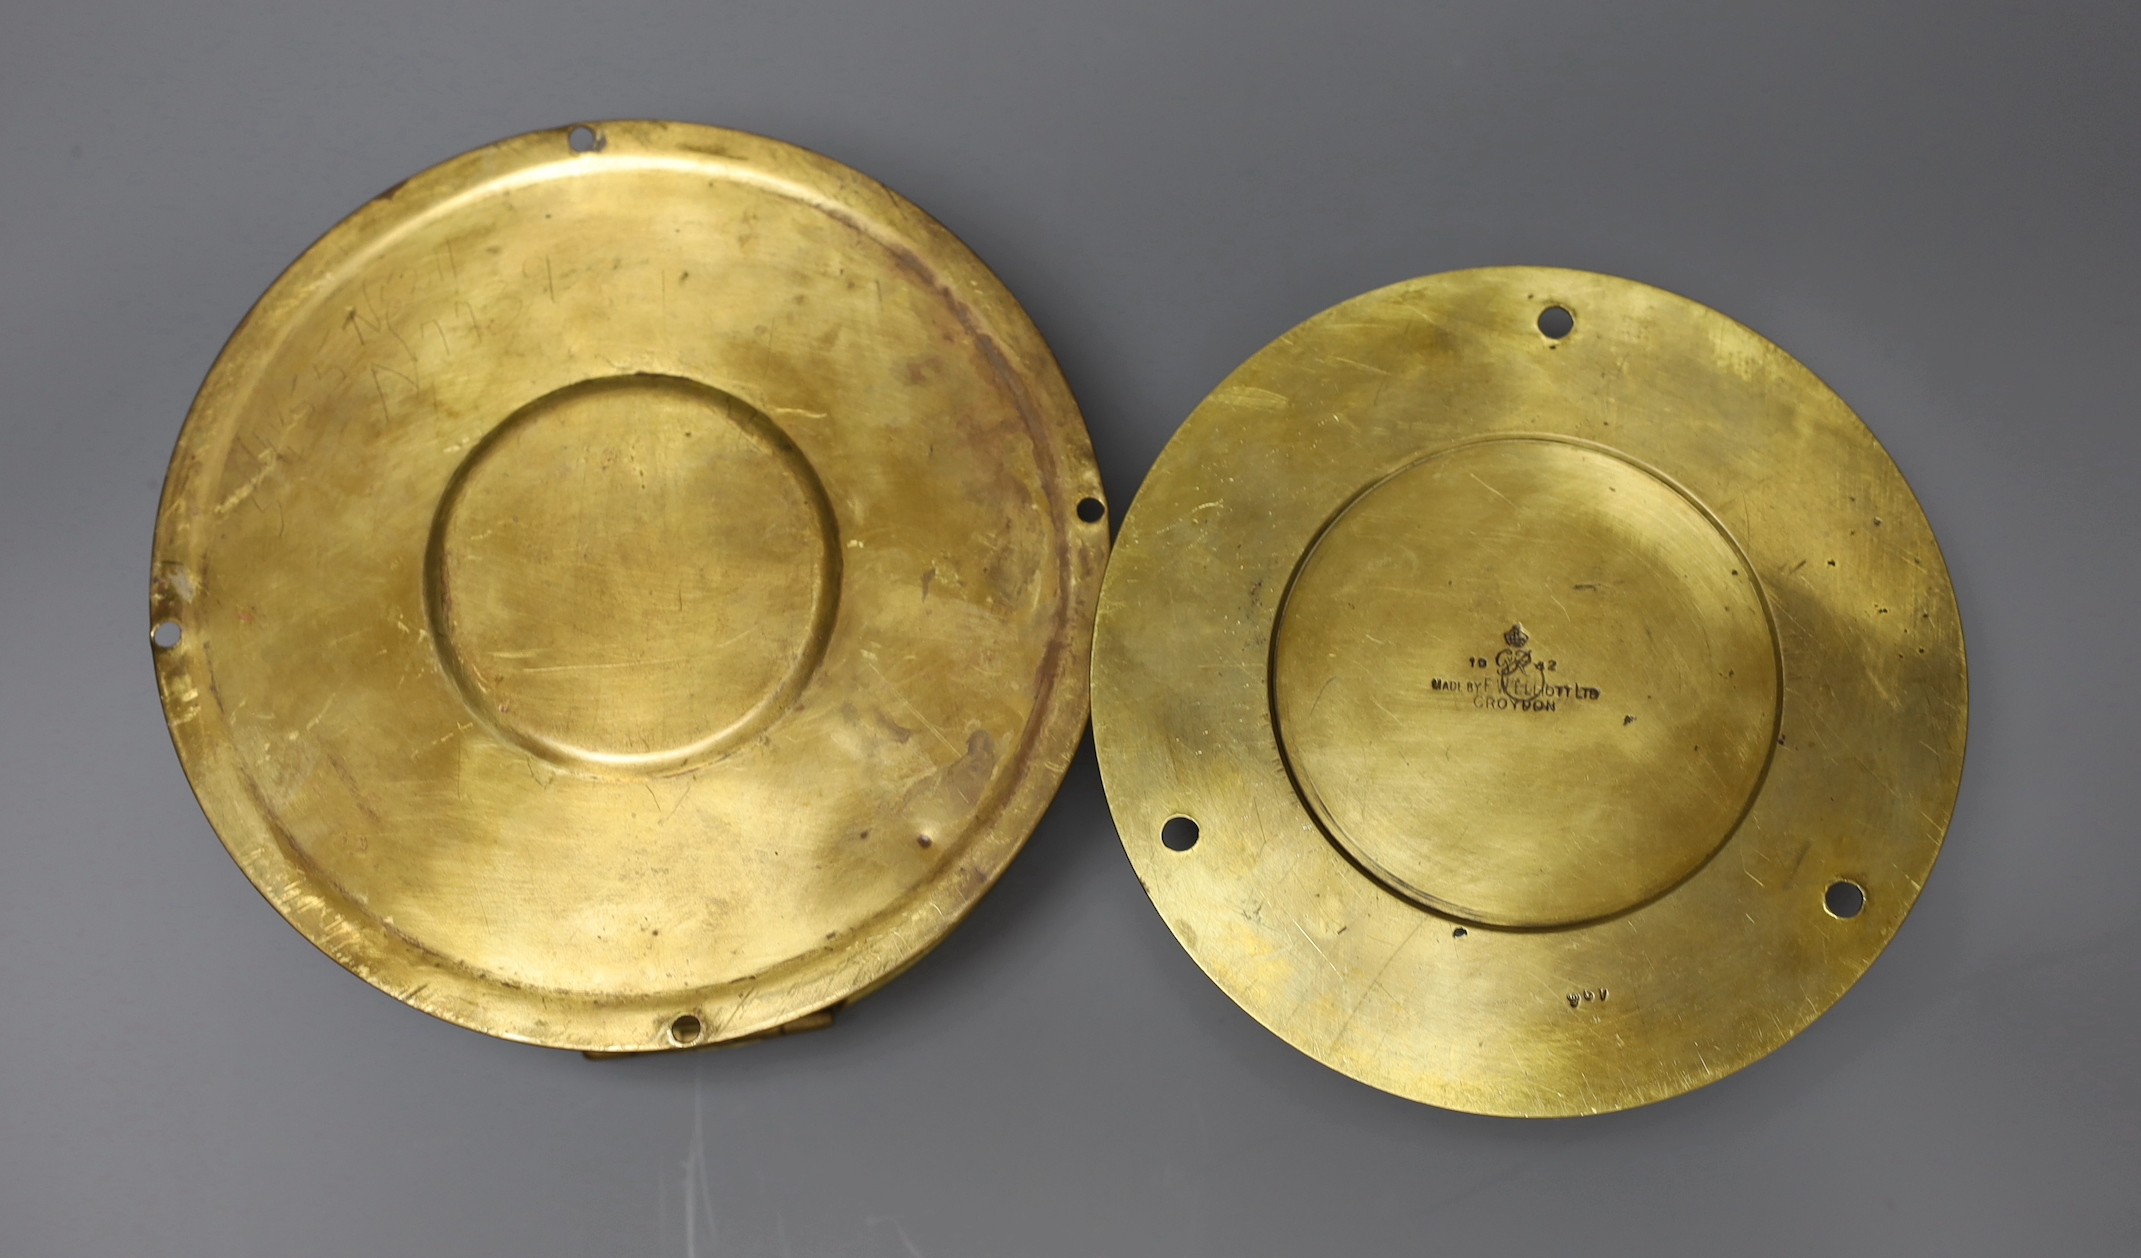 Two brass bulkhead timepieces